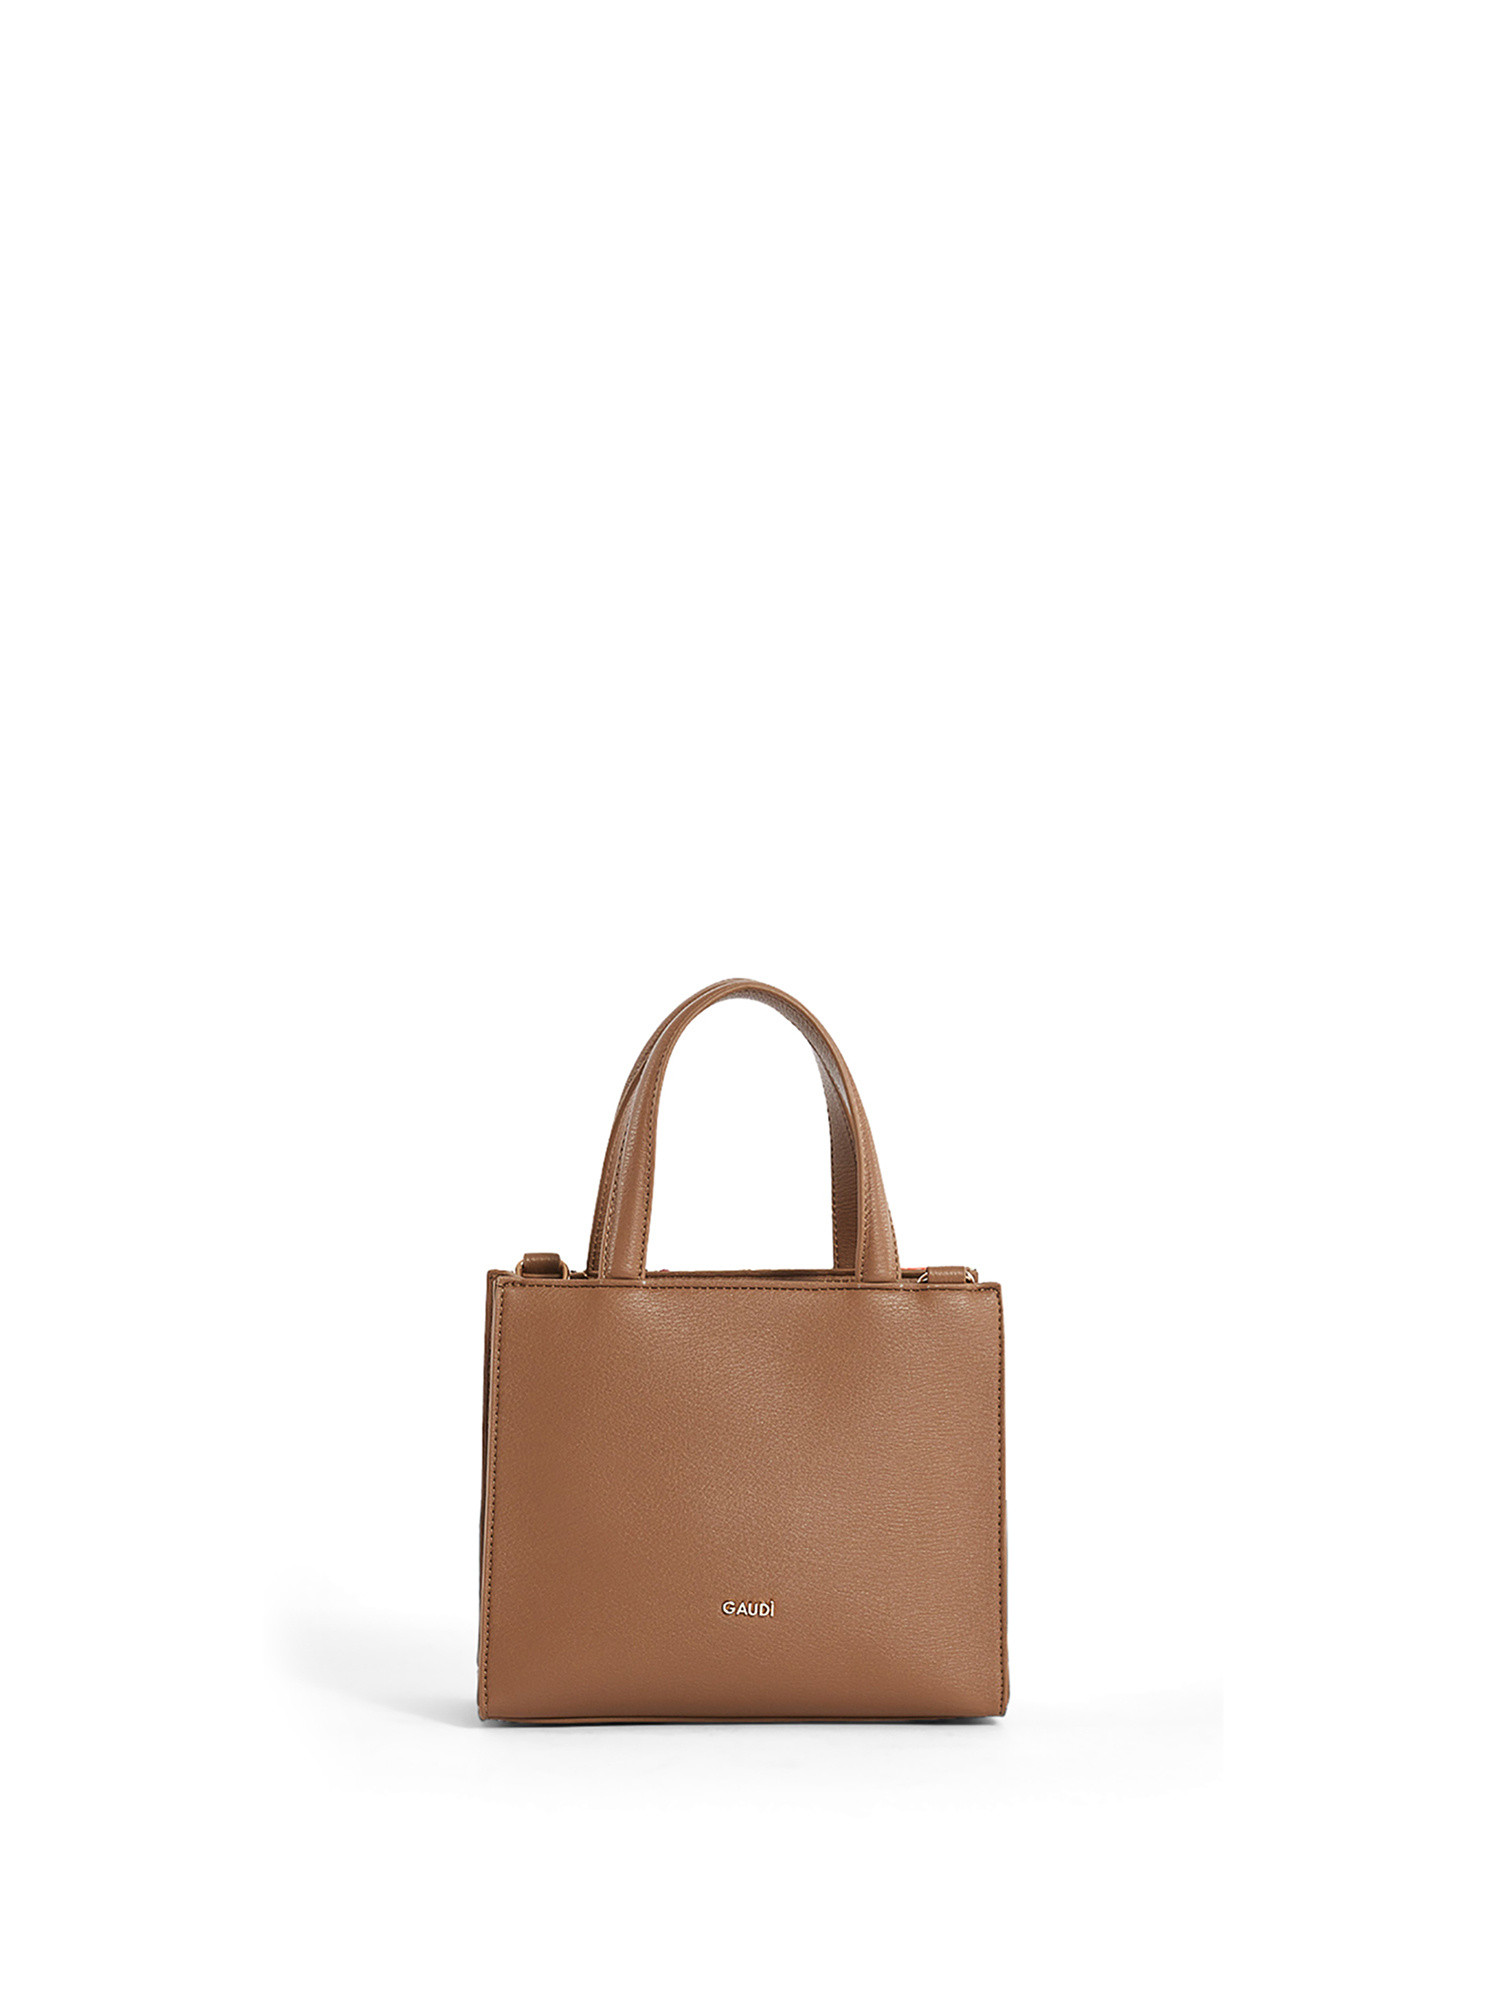 Gaudì - Raffia and imitation leather mini shopping bag, Camel, large image number 0